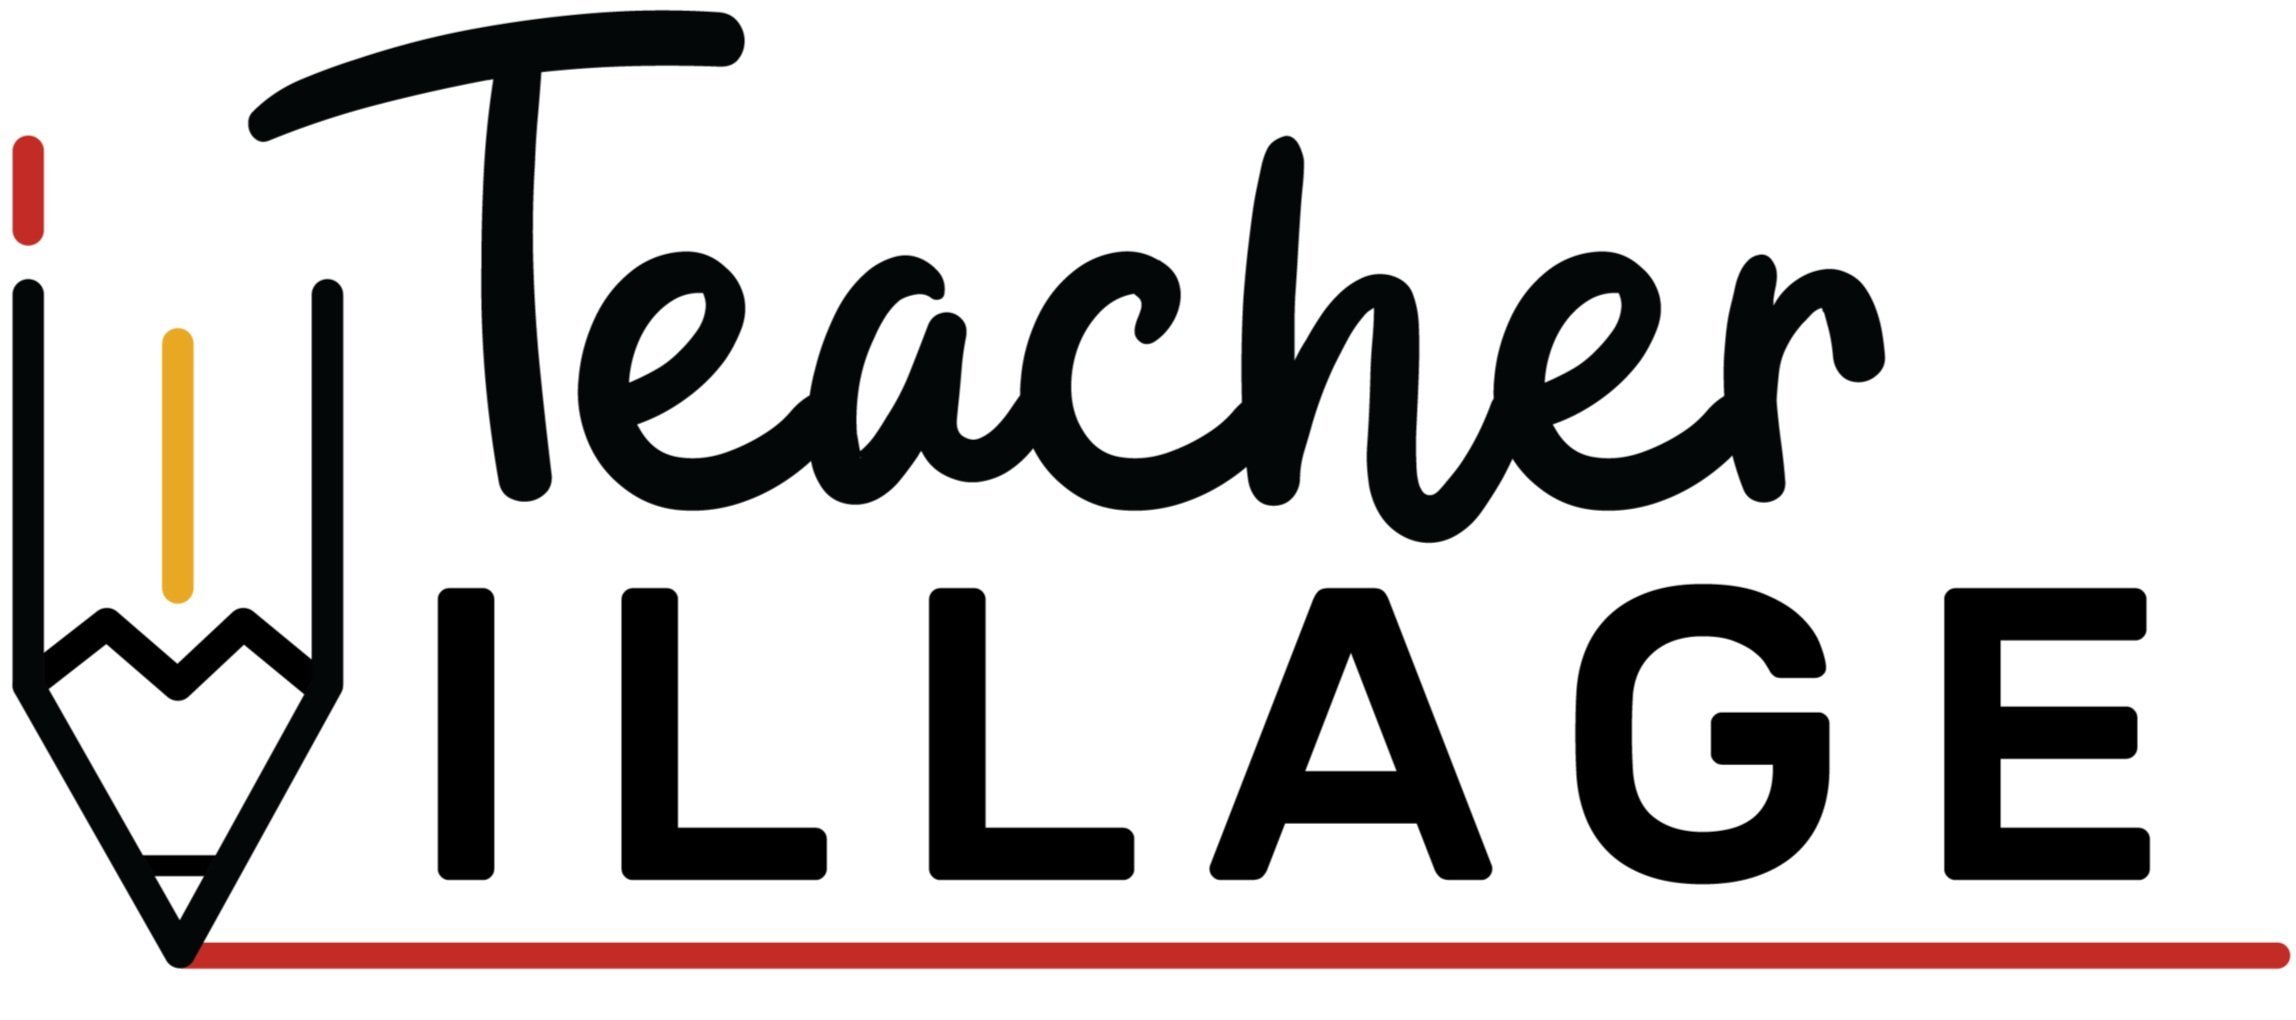 Teacher+Village+Logo.jpeg